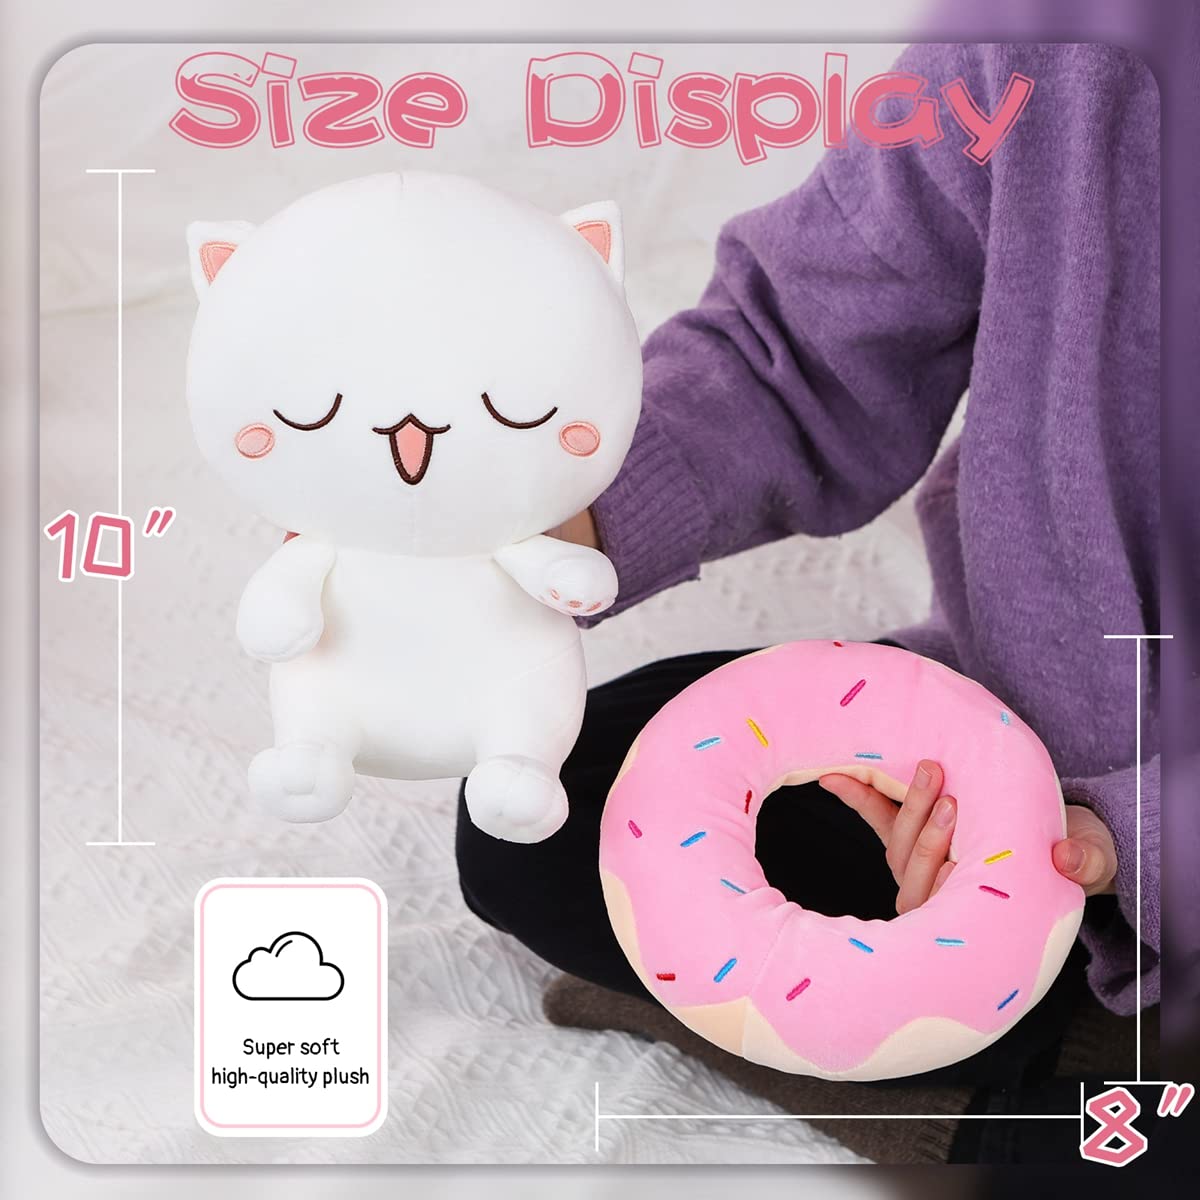 25 CM / 10 inch Cute plush donut cat stuffed animal, super soft kawaii cat white closed eyes kitten plush toy